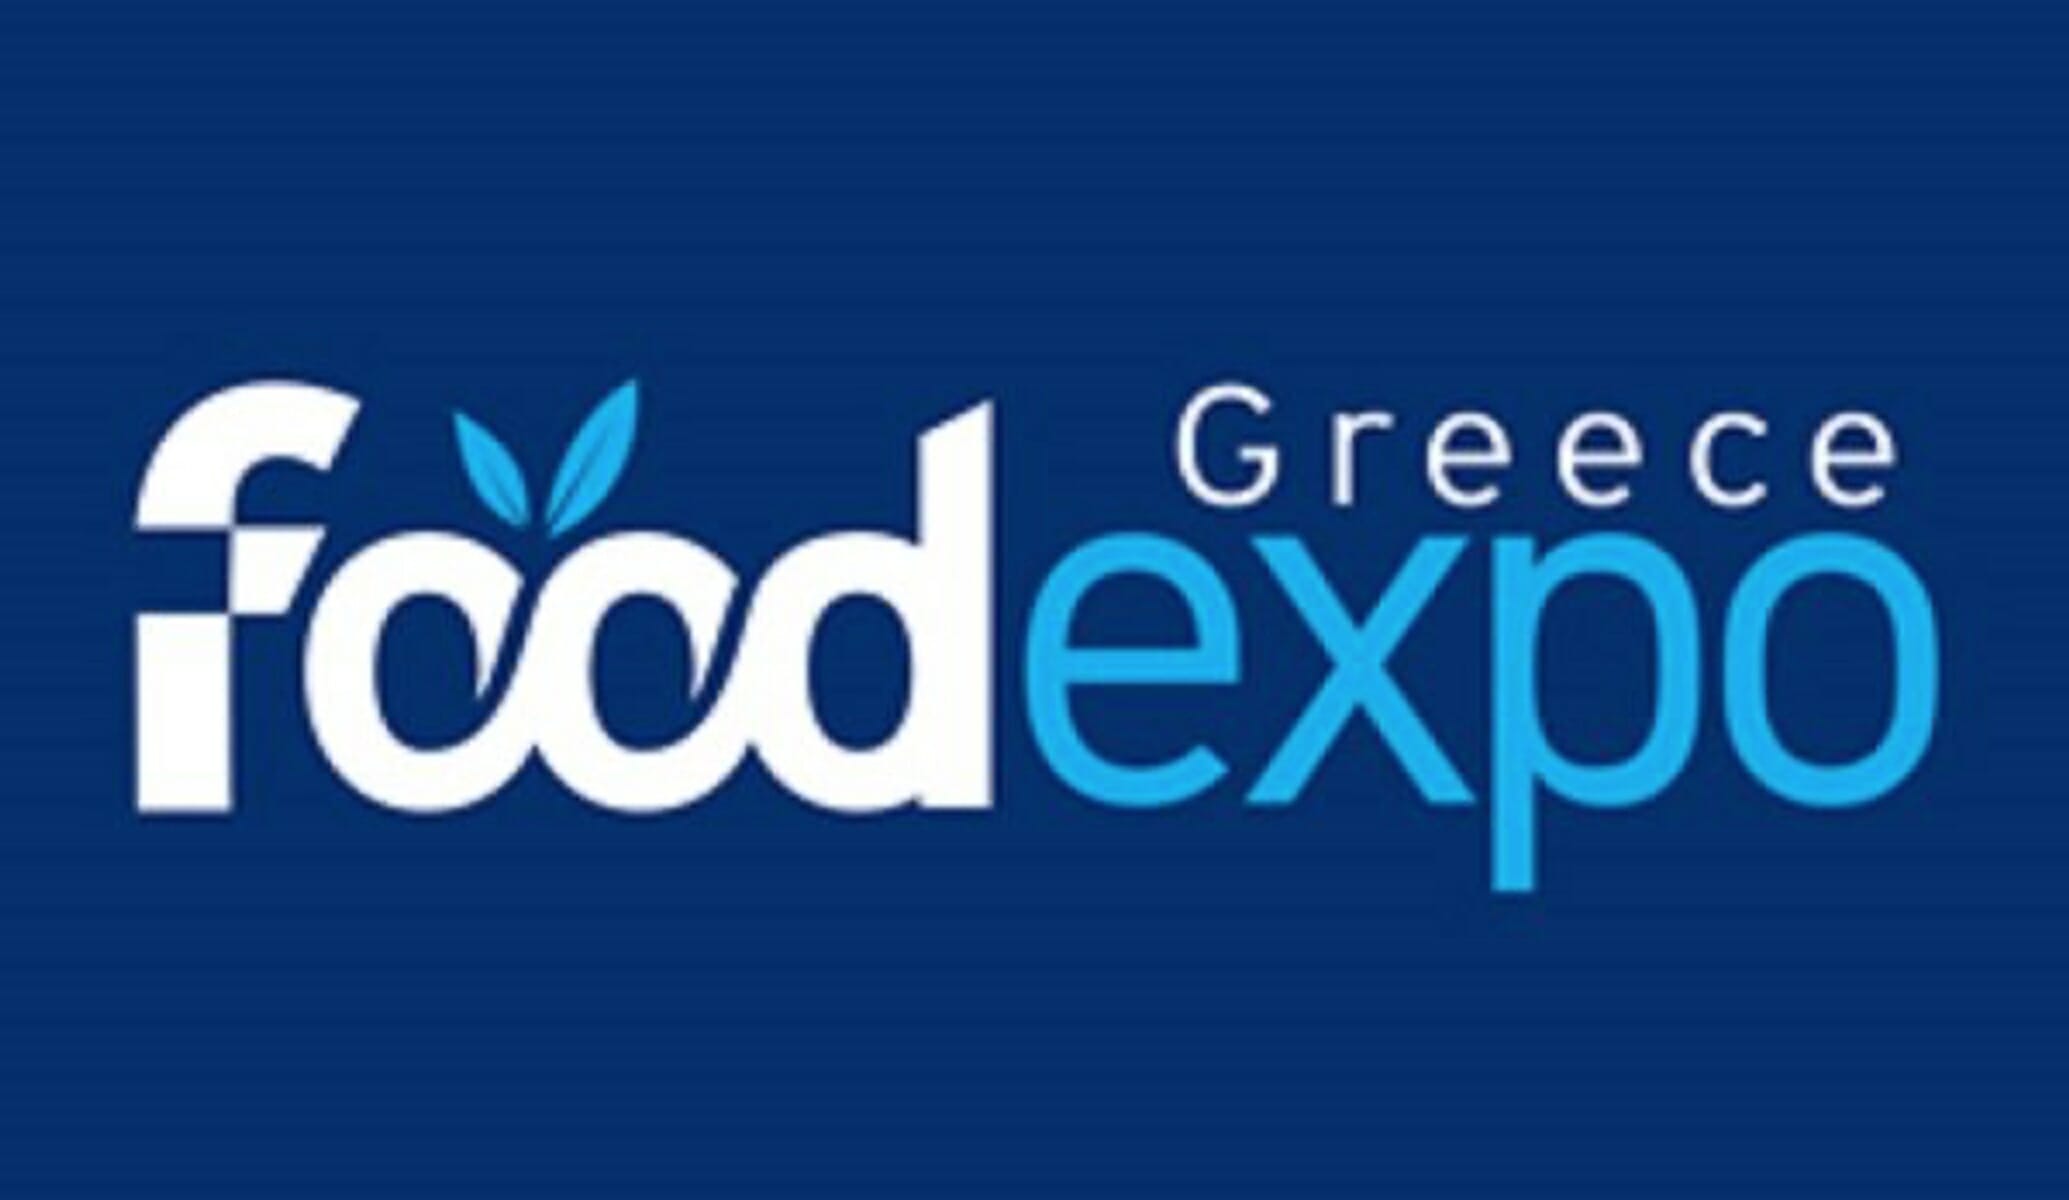 Nέες ημερομηνίες για την Διεθνή Έκθεση Τροφίμων & Ποτών FOOD EXPO 2020